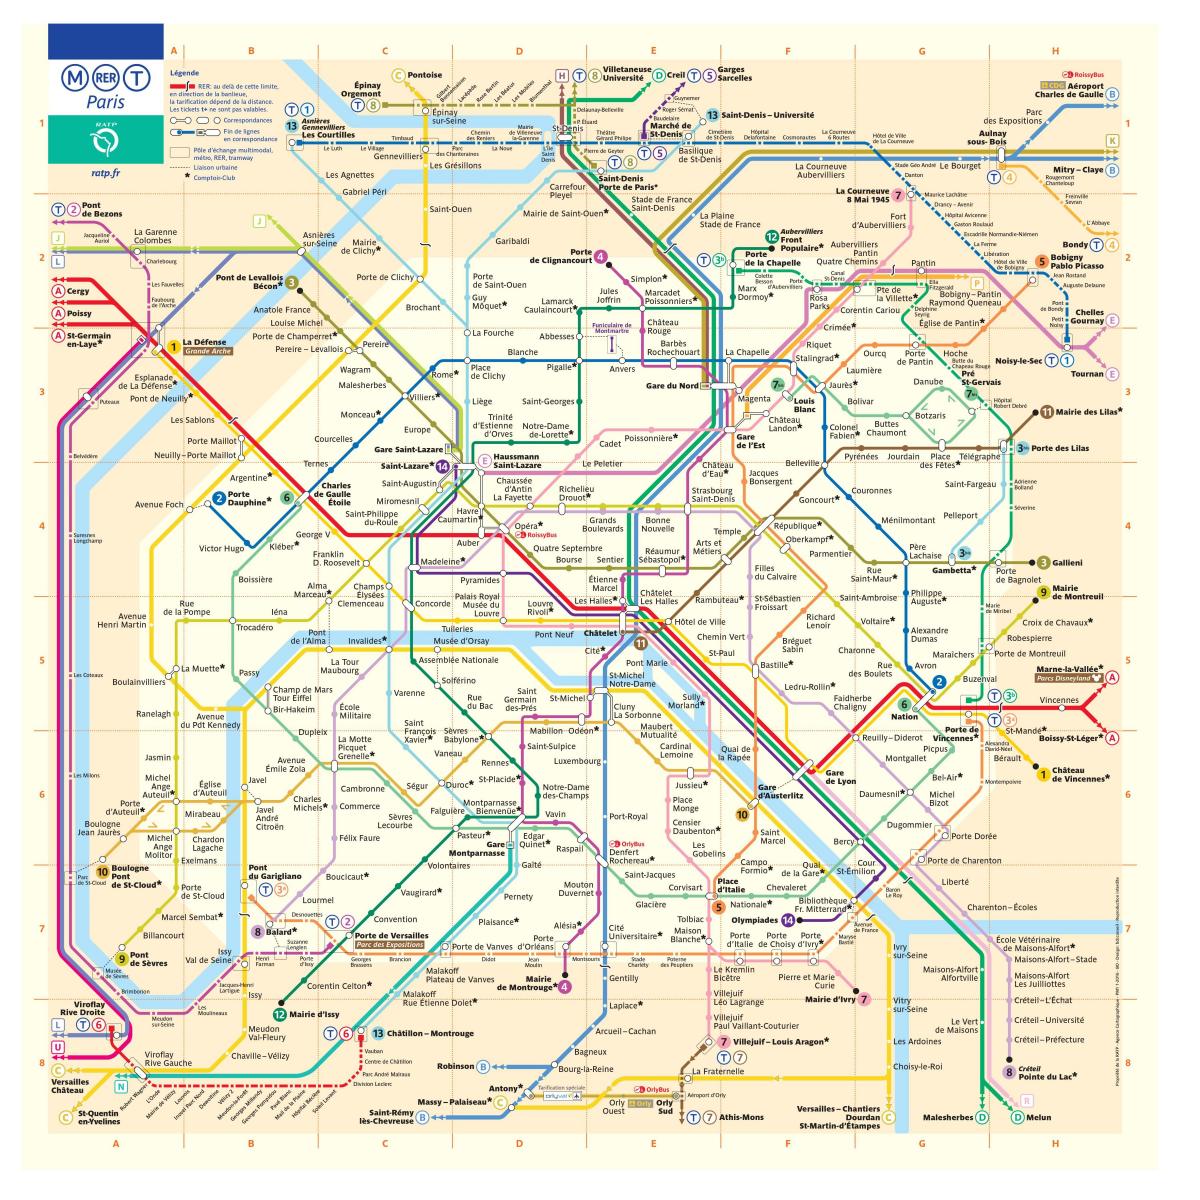 Kort over Paris metro